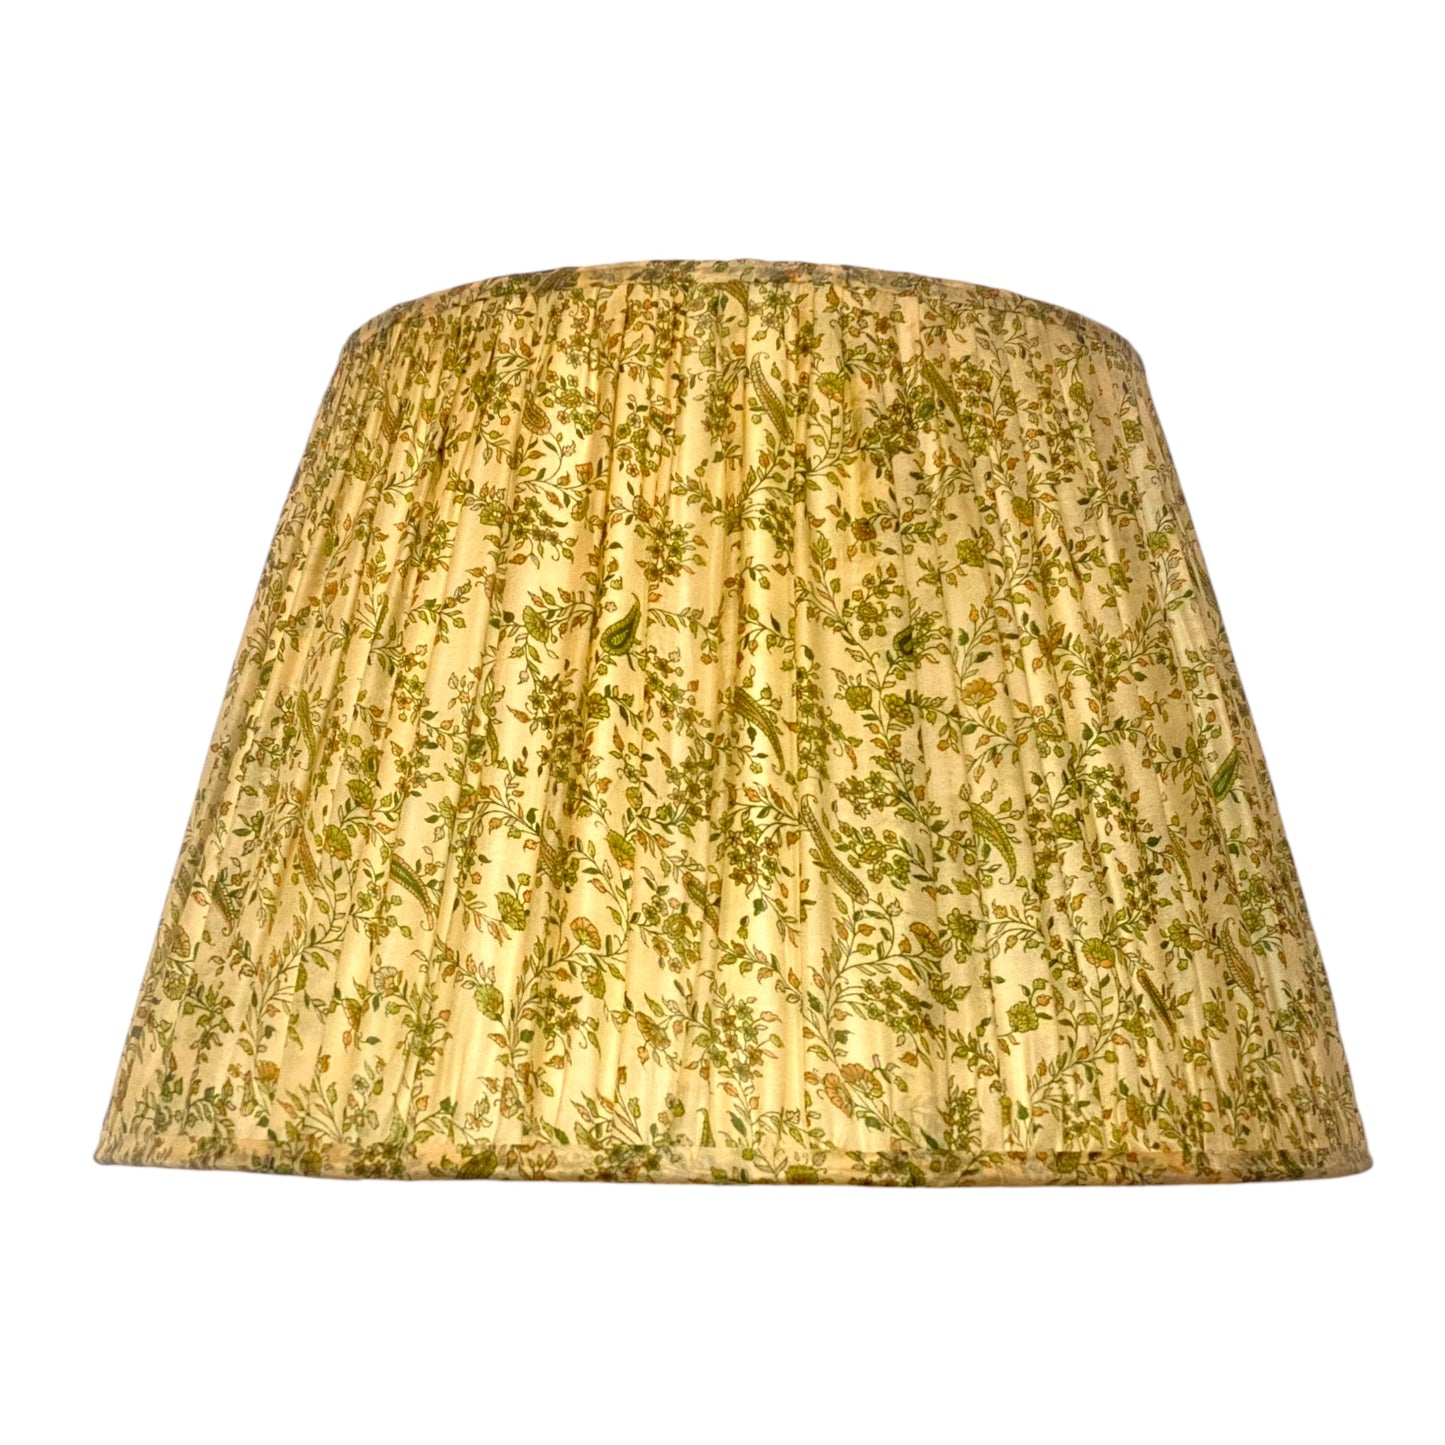 Vintage silk sari lampshade in green and cream